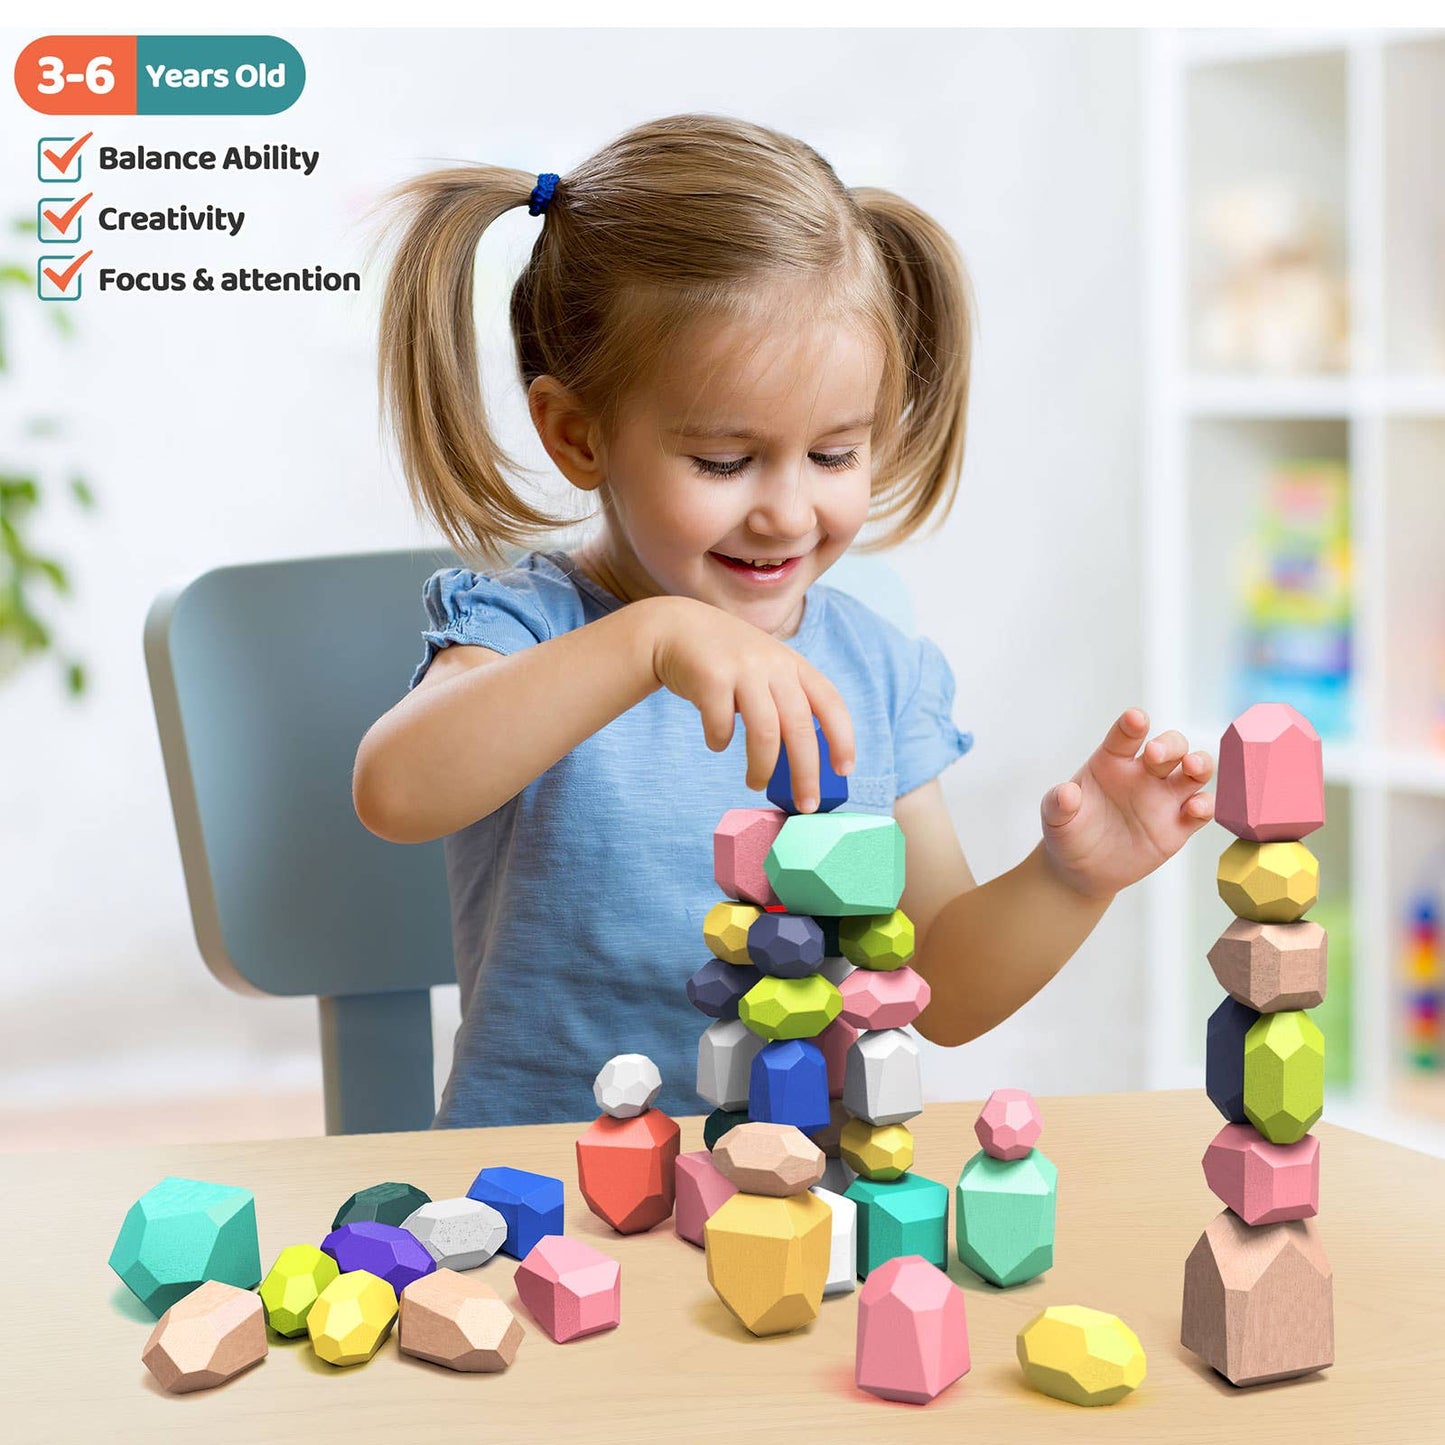 Montessori-inspired Wooden Balancing Stacking Rocks Toy